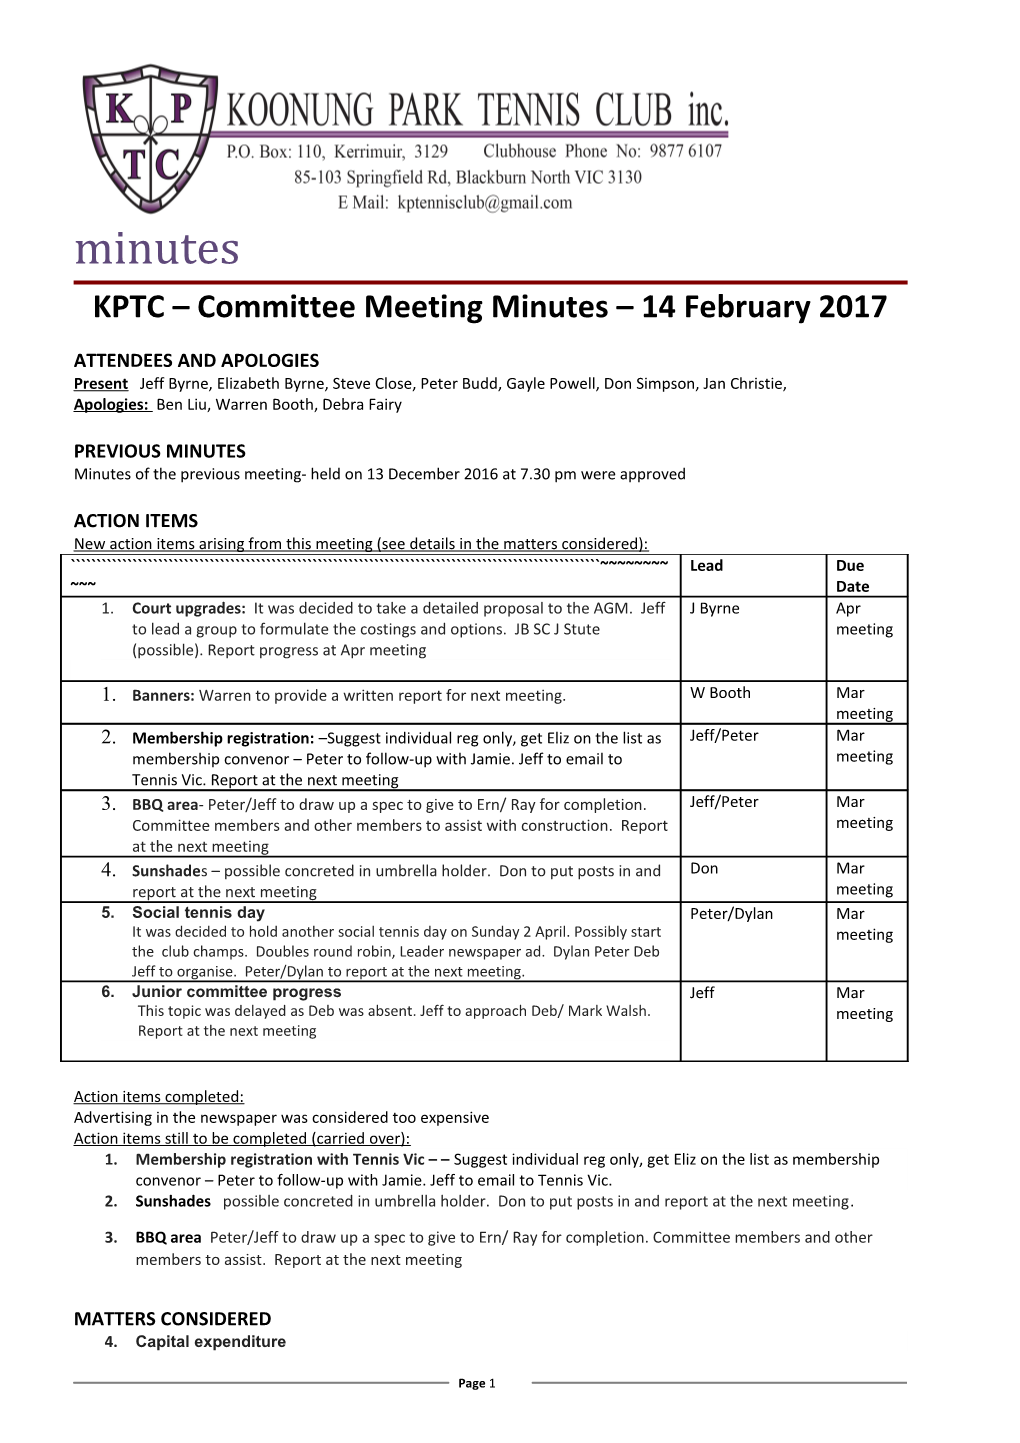 KPTC Committee Meeting Minutes 14 February 2017